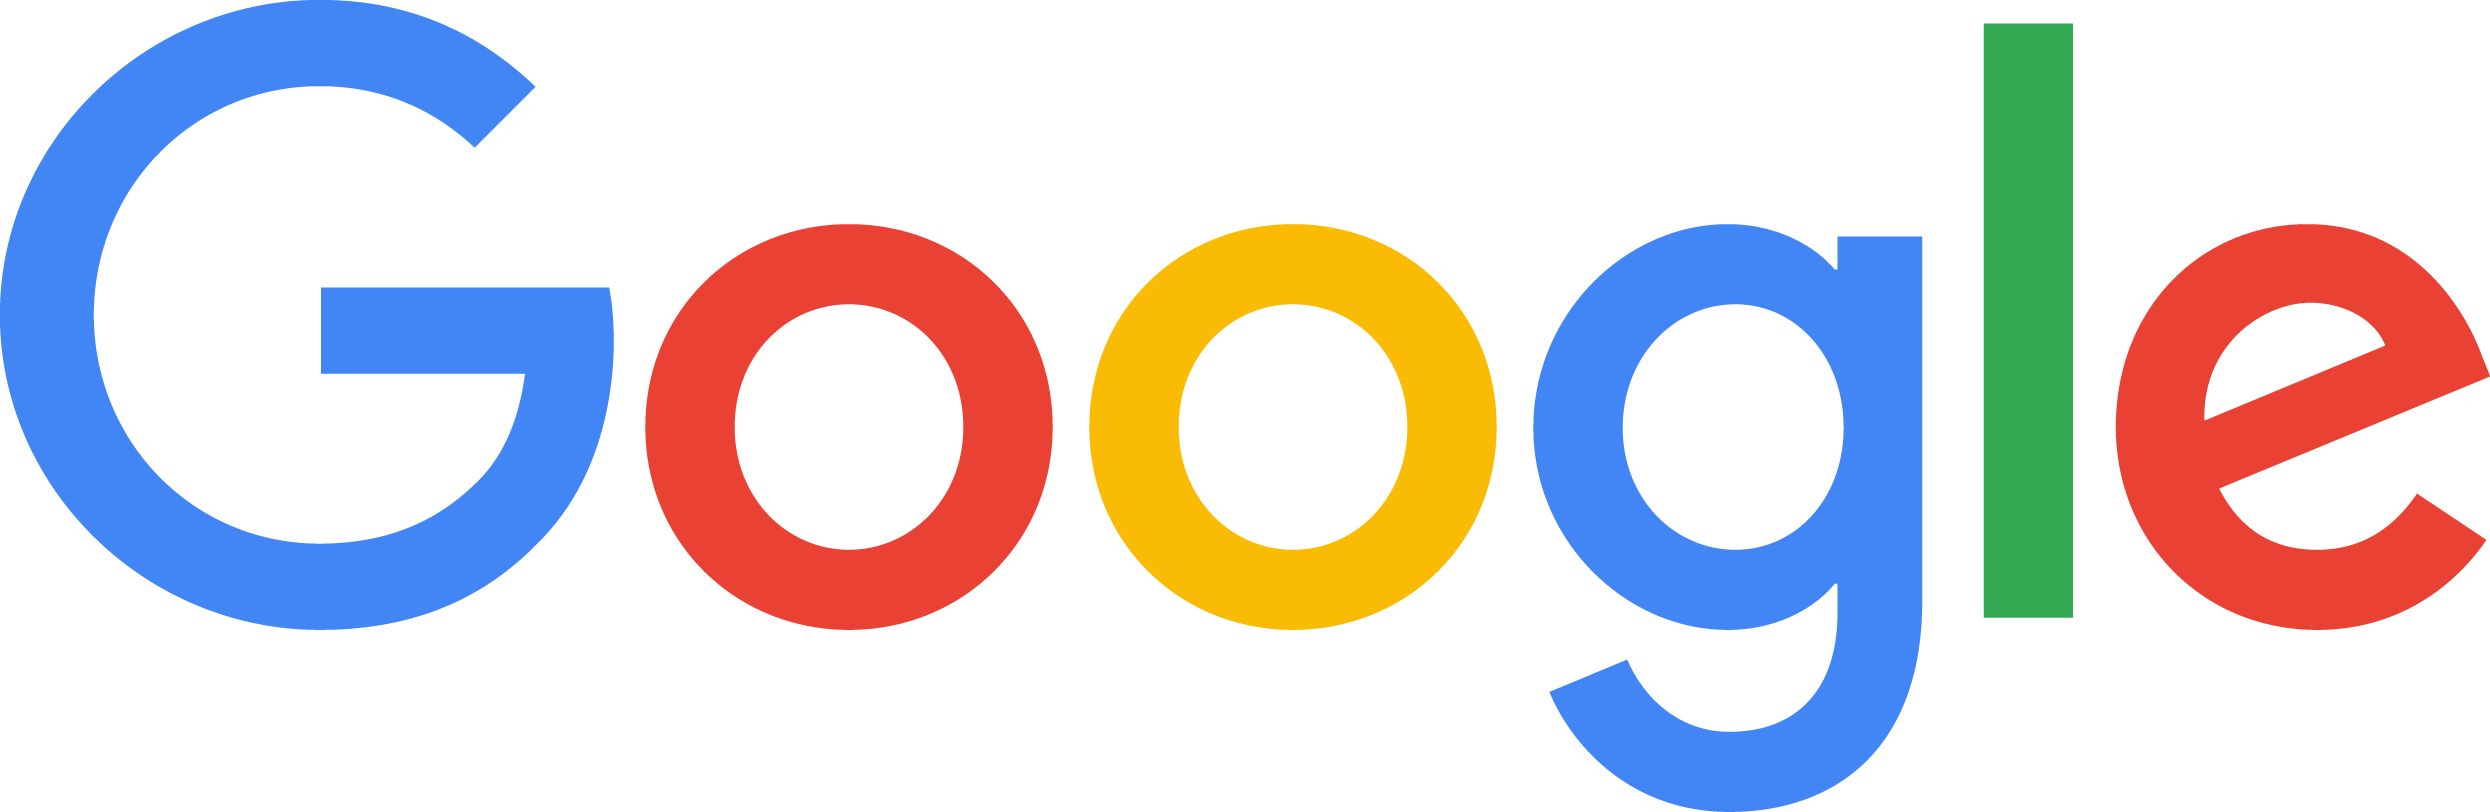 logo Google FullColor 3x 830x271px